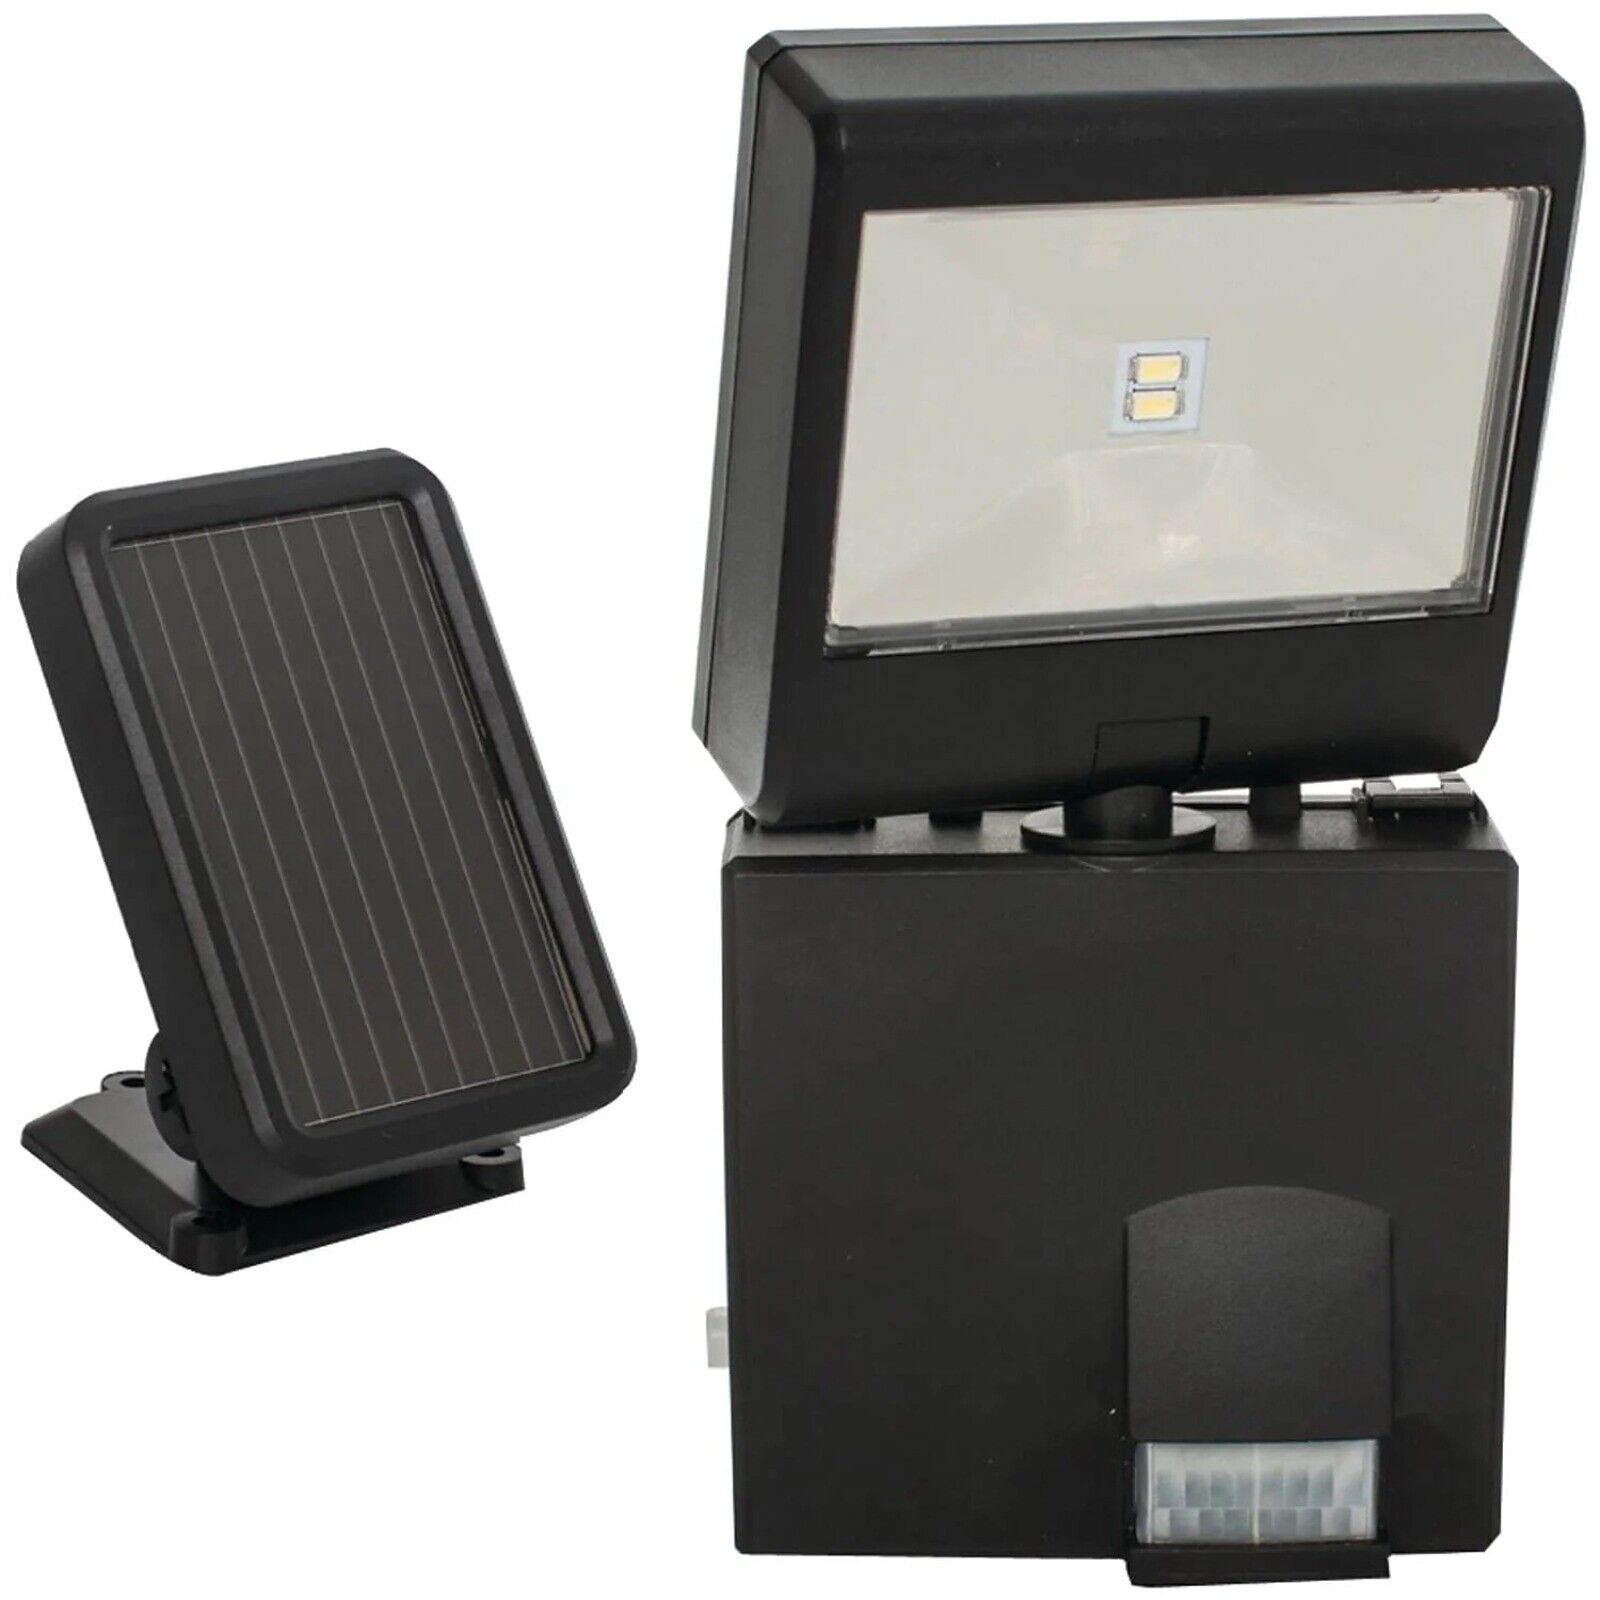 Spotlight - Adjustable, LED Security Spotlight with A Weatherproof Casing.